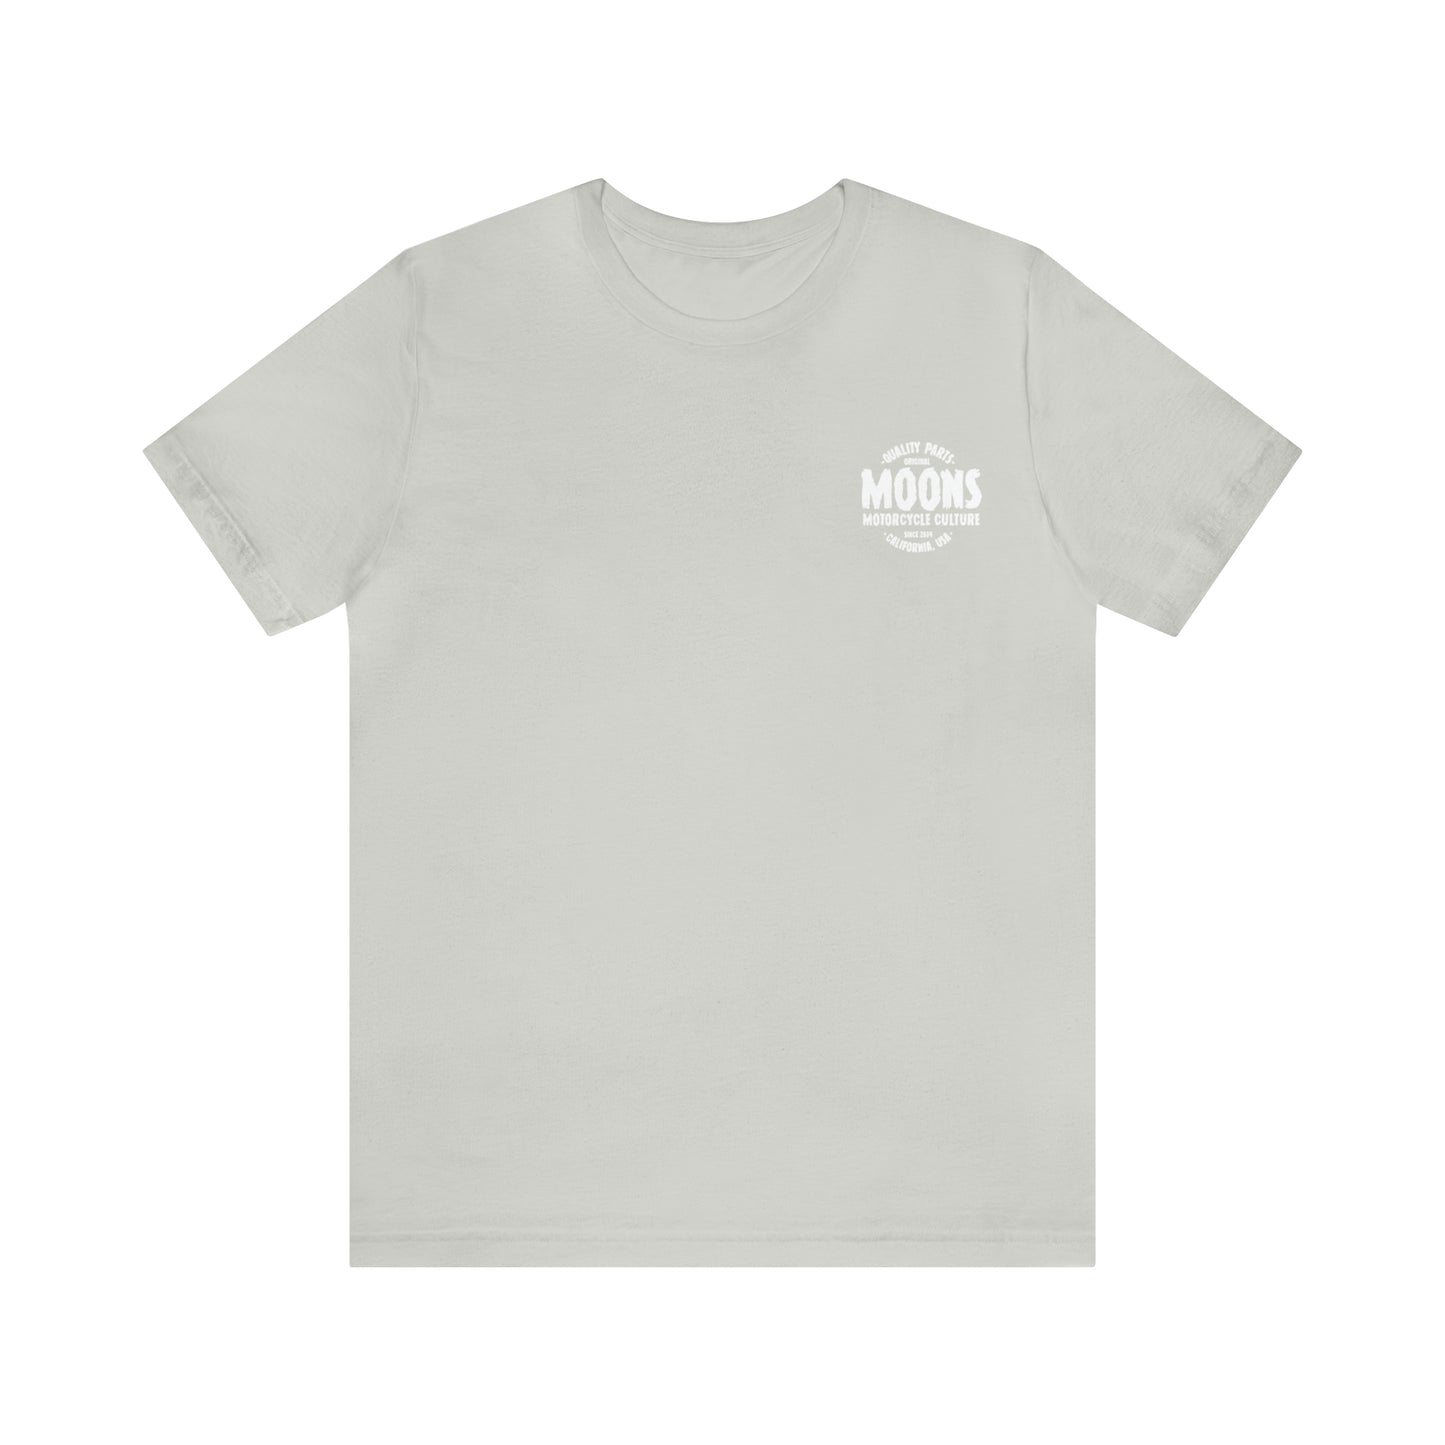 MOONSMC® Quality Parts Circle T-Shirt